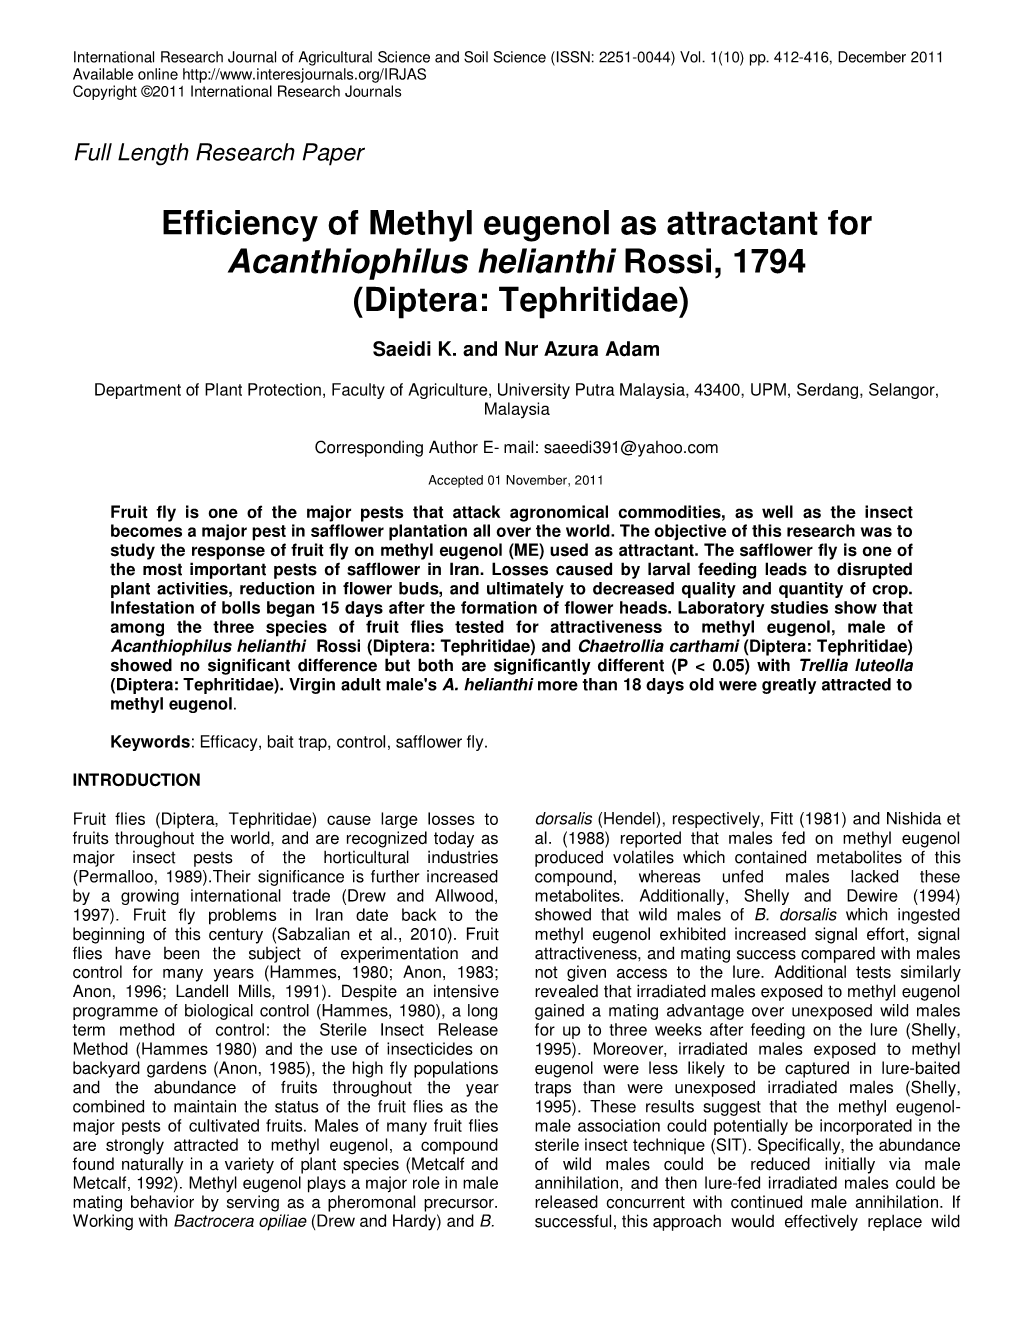 Efficiency of Methyl Eugenol As Attractant for Acanthiophilus Helianthi Rossi, 1794 (Diptera: Tephritidae)